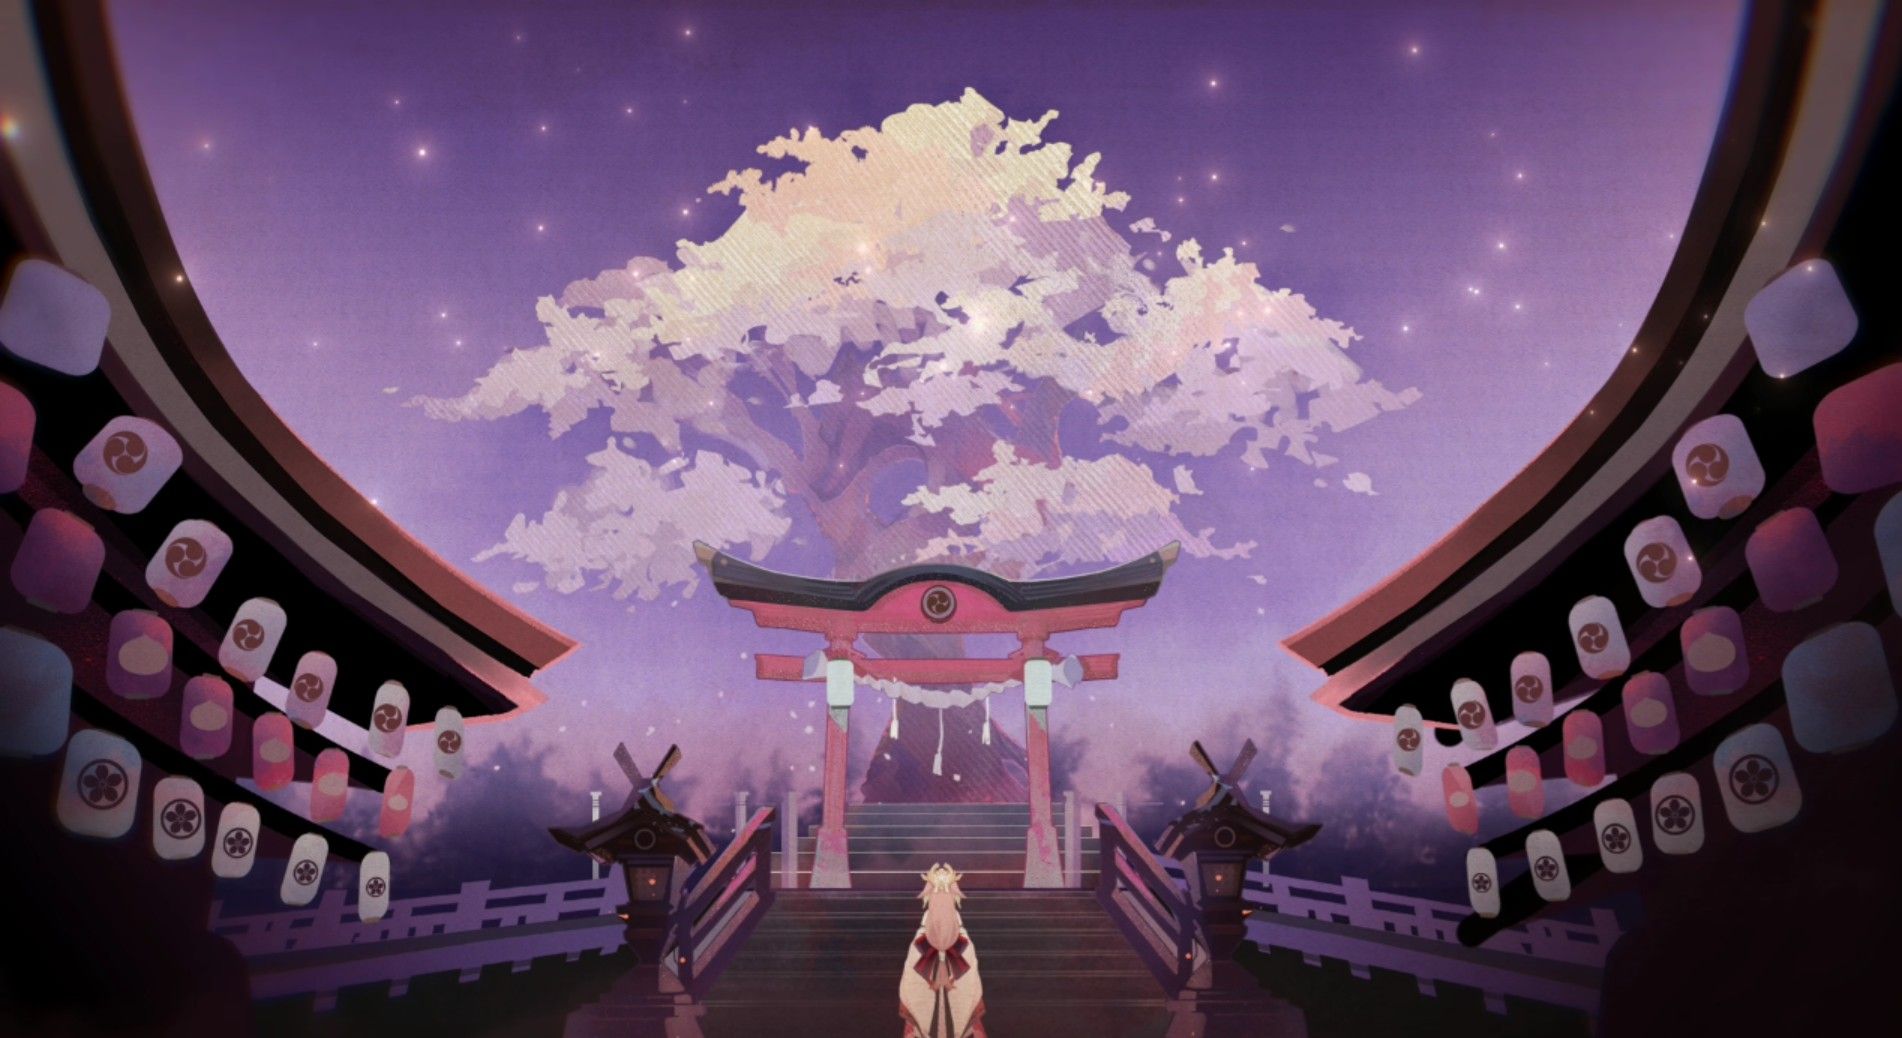 Yae miko shrine. Wallpaper pc, Anime background wallpaper, Anime background